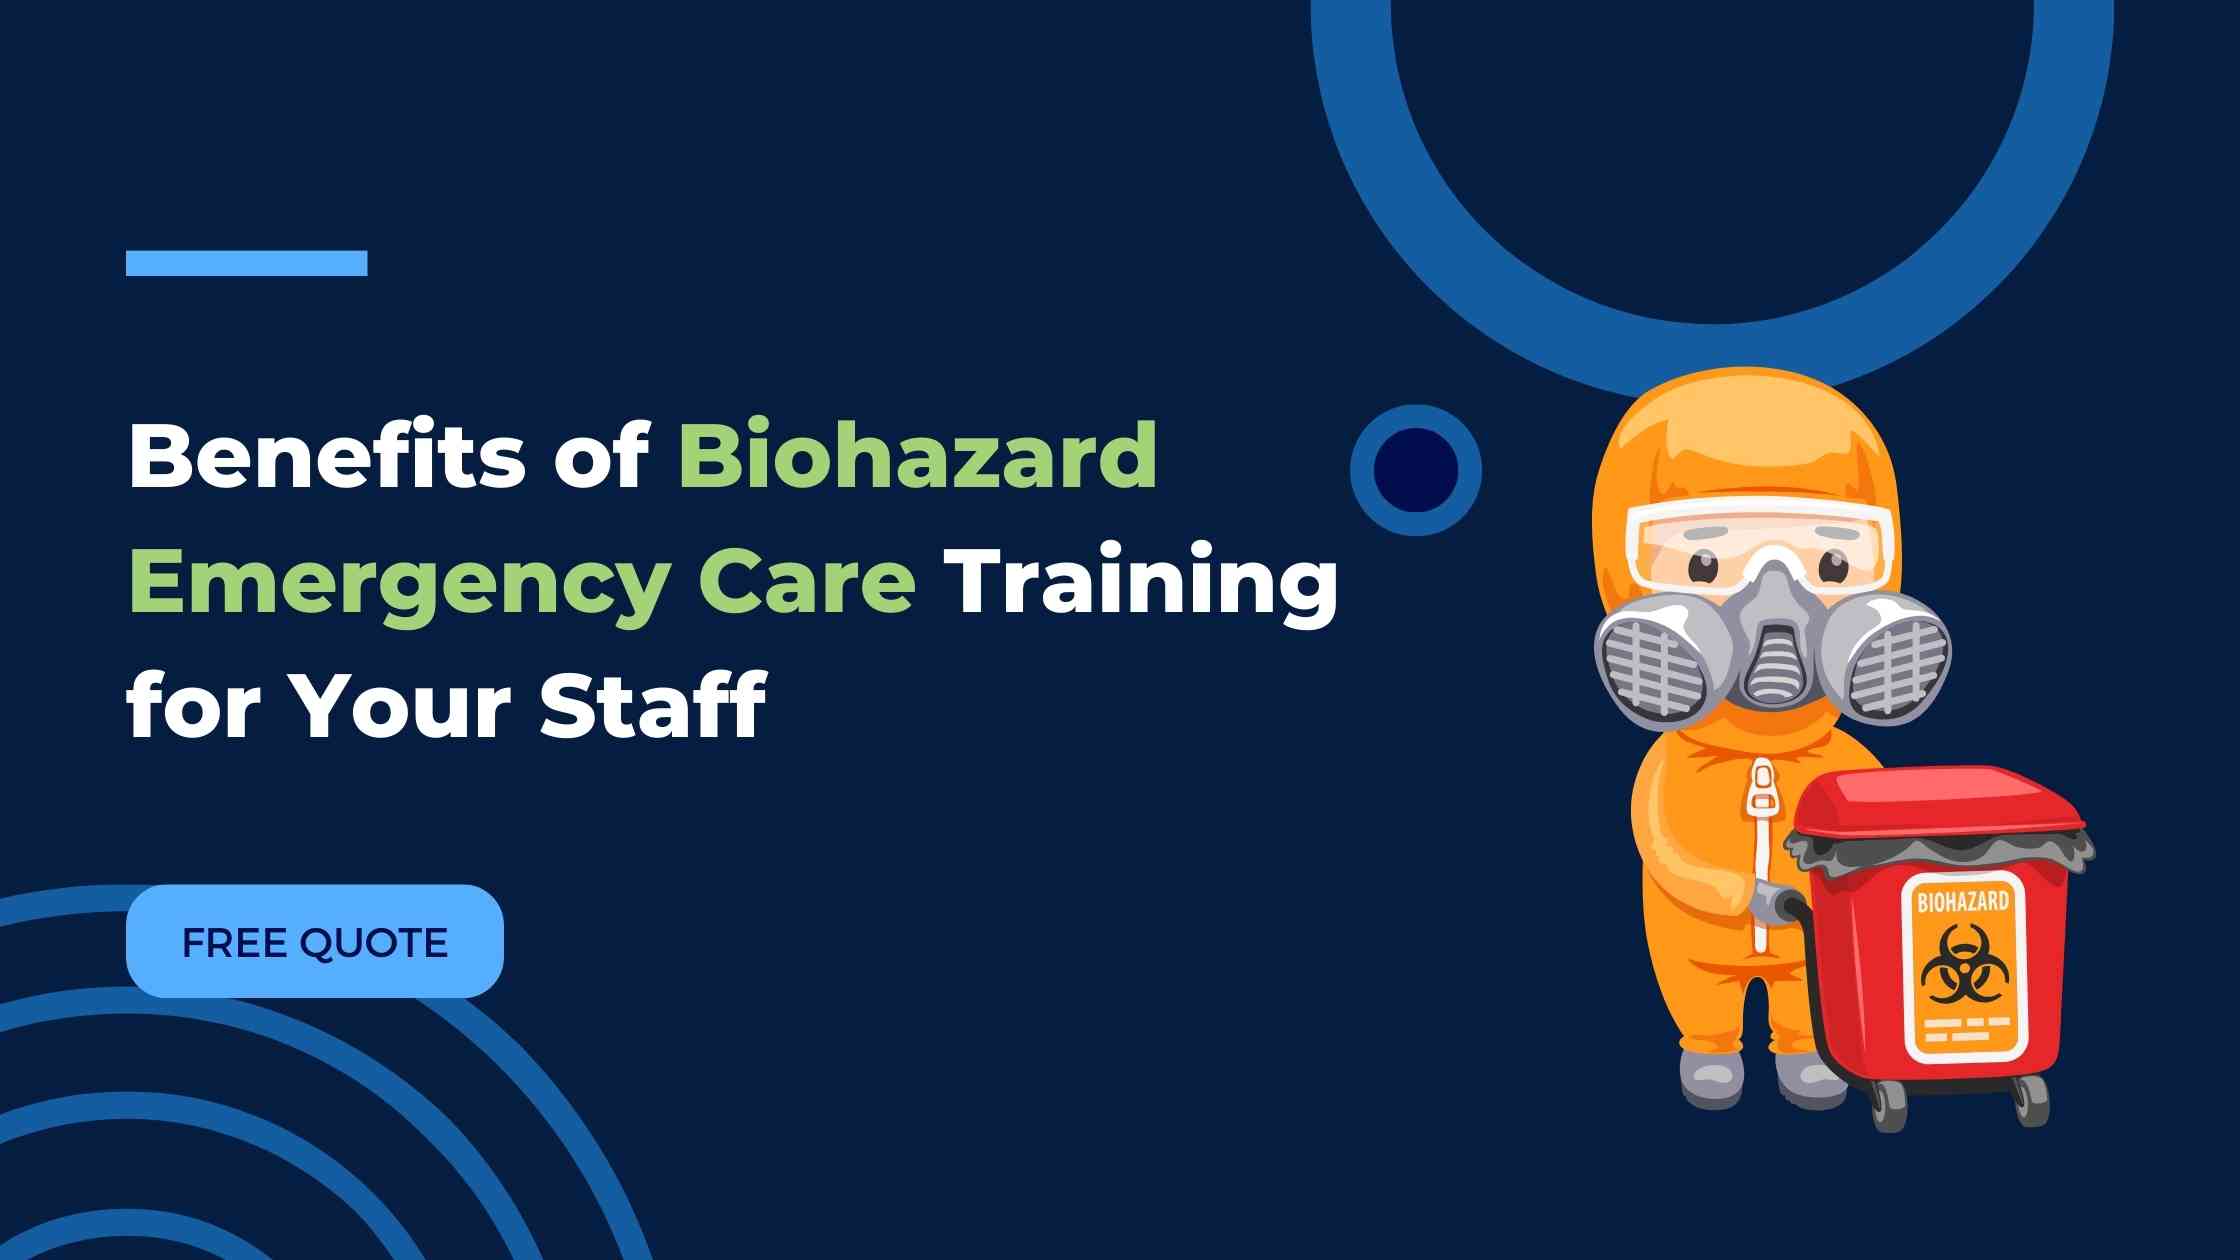 Biohazard Emergency Care Training